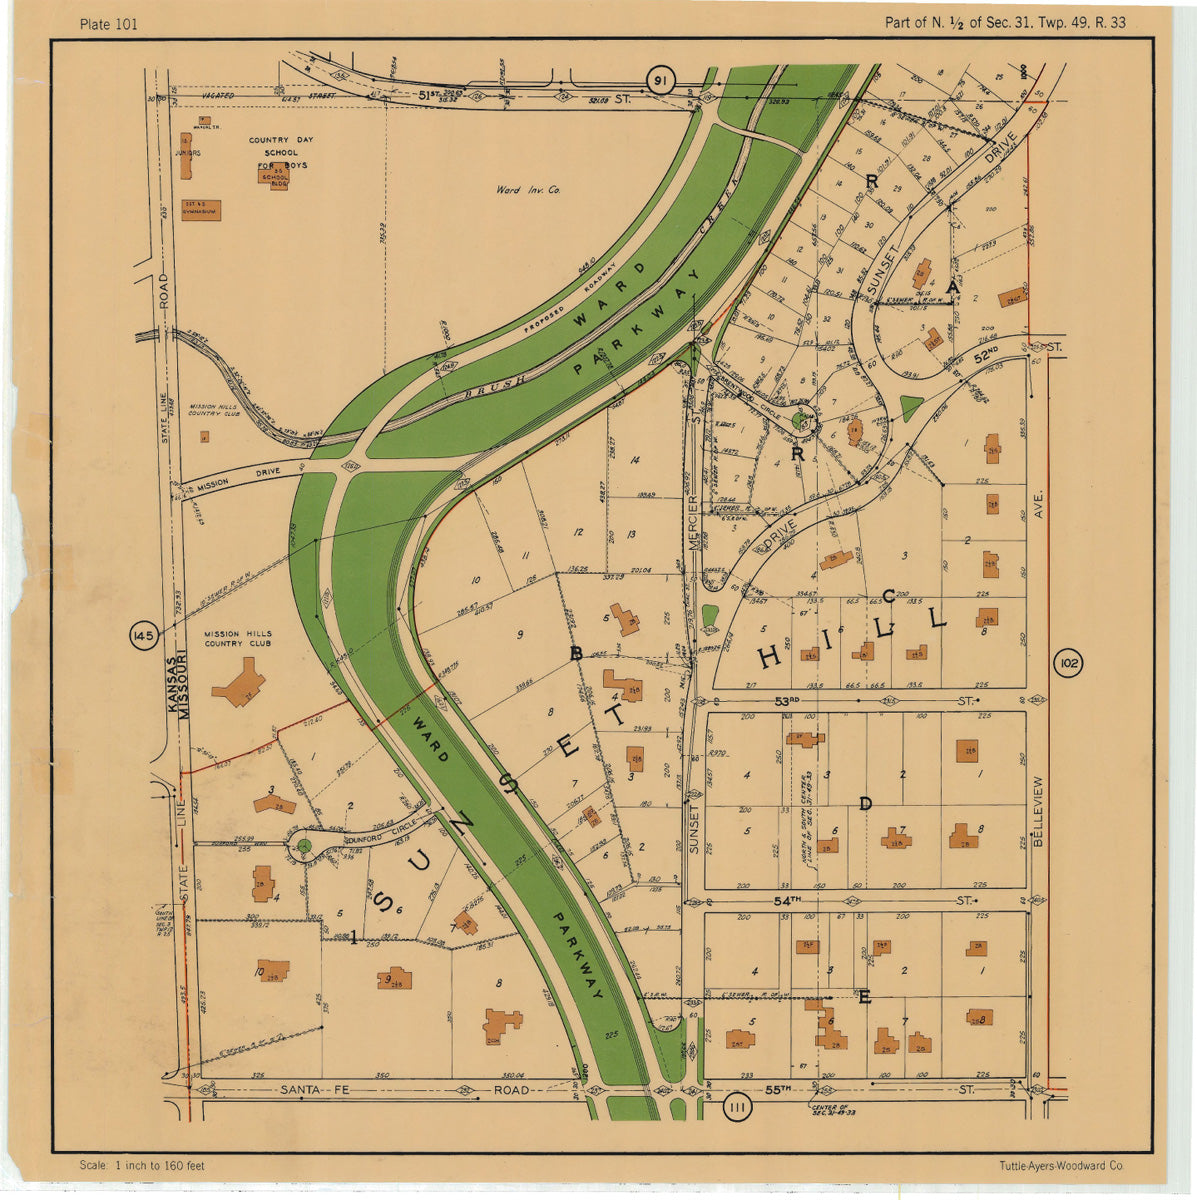 Kansas City 1925 Neighborhood Map - Plate #101 51st-55th State Line-Belleview